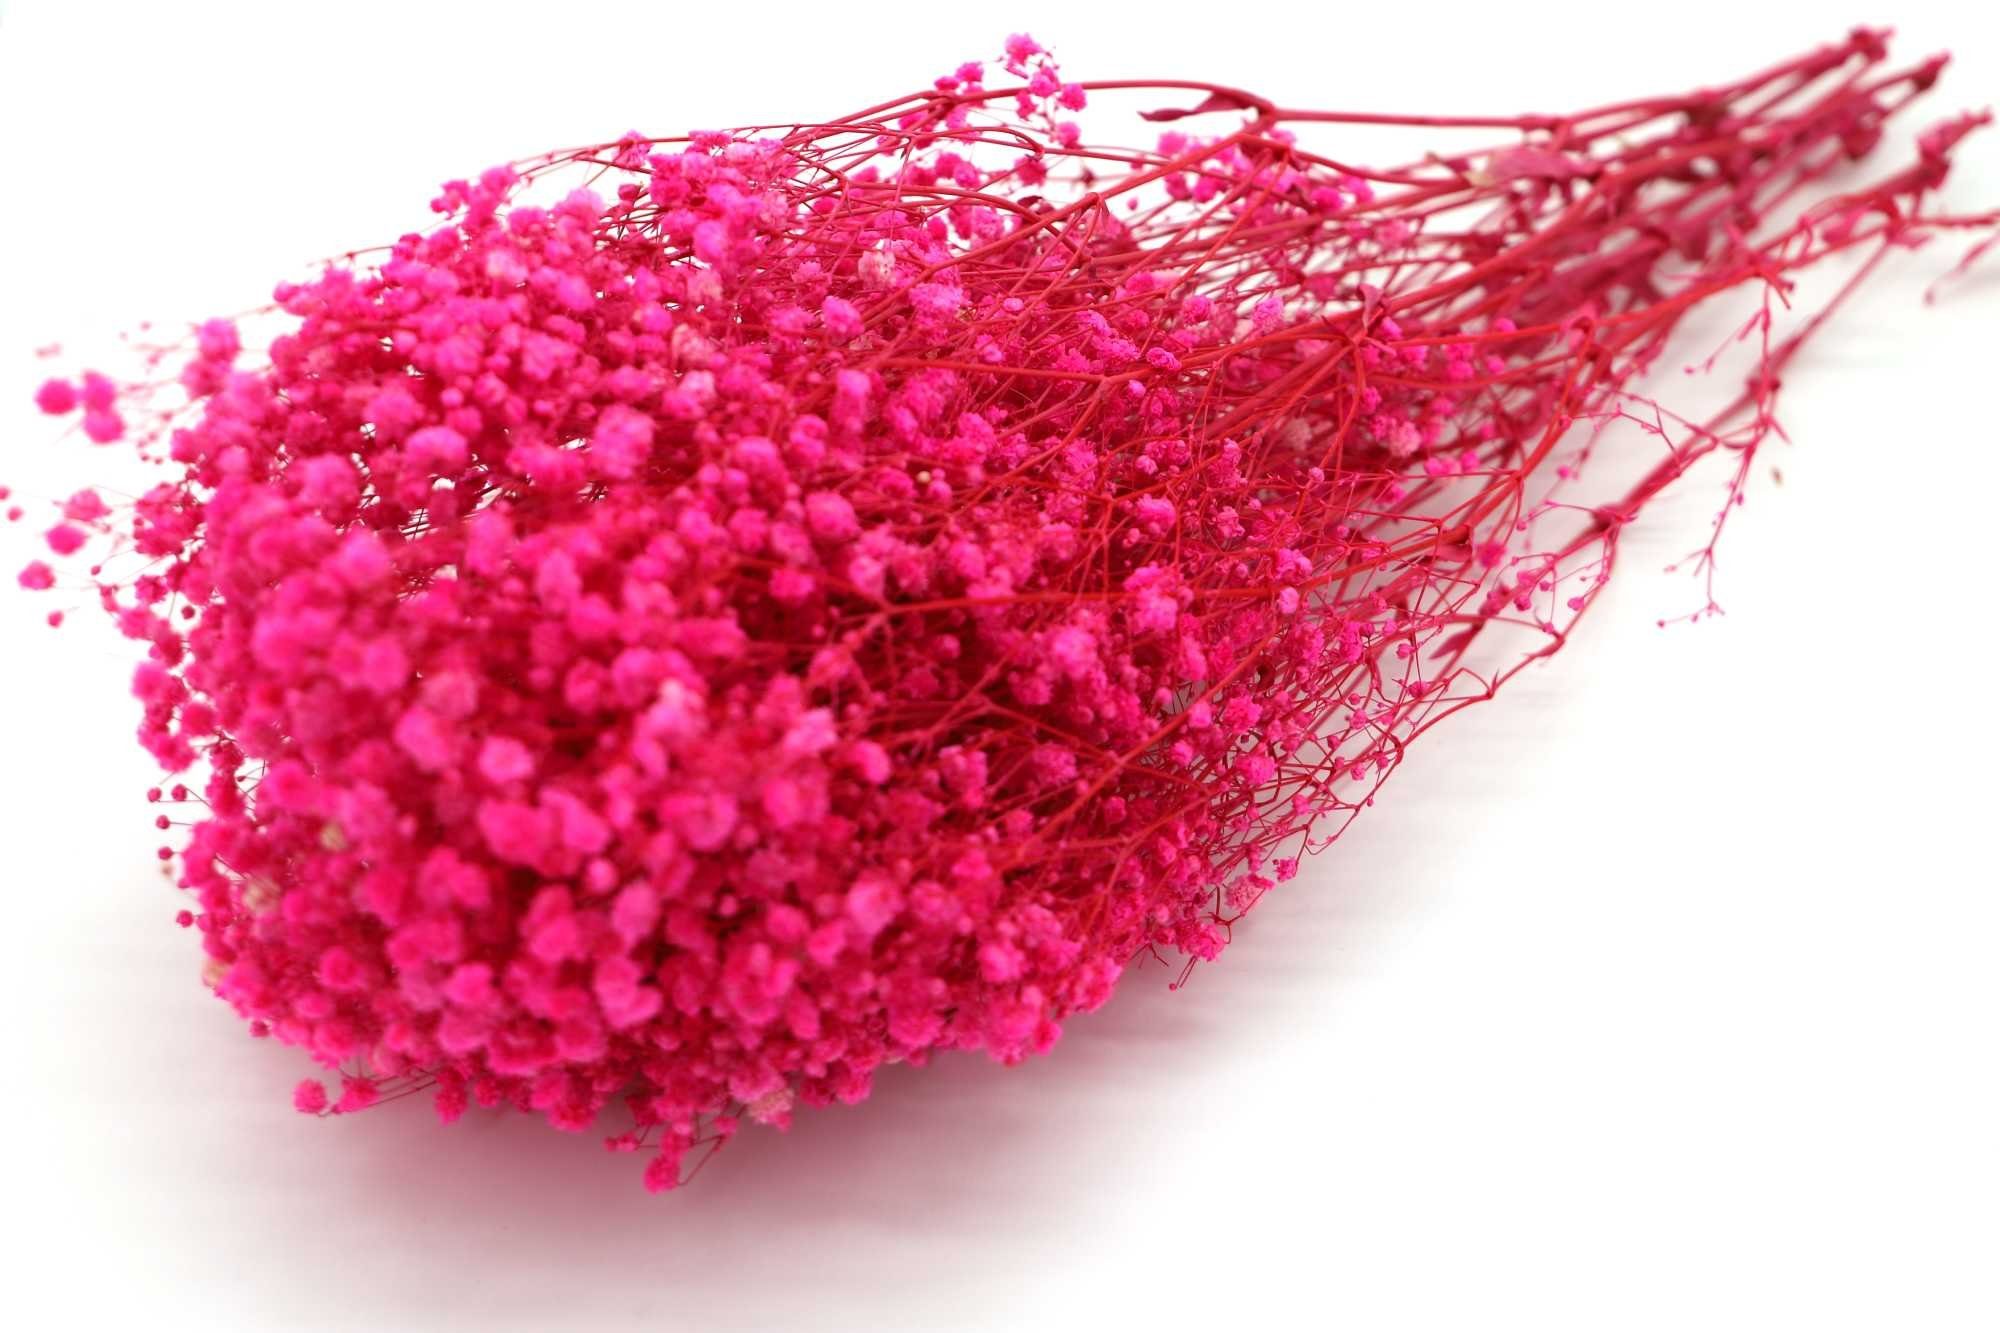 Trockenblume Gypsophila "Babys Breath" in verschiedenen Farben - Pink, Kunstharz.Art